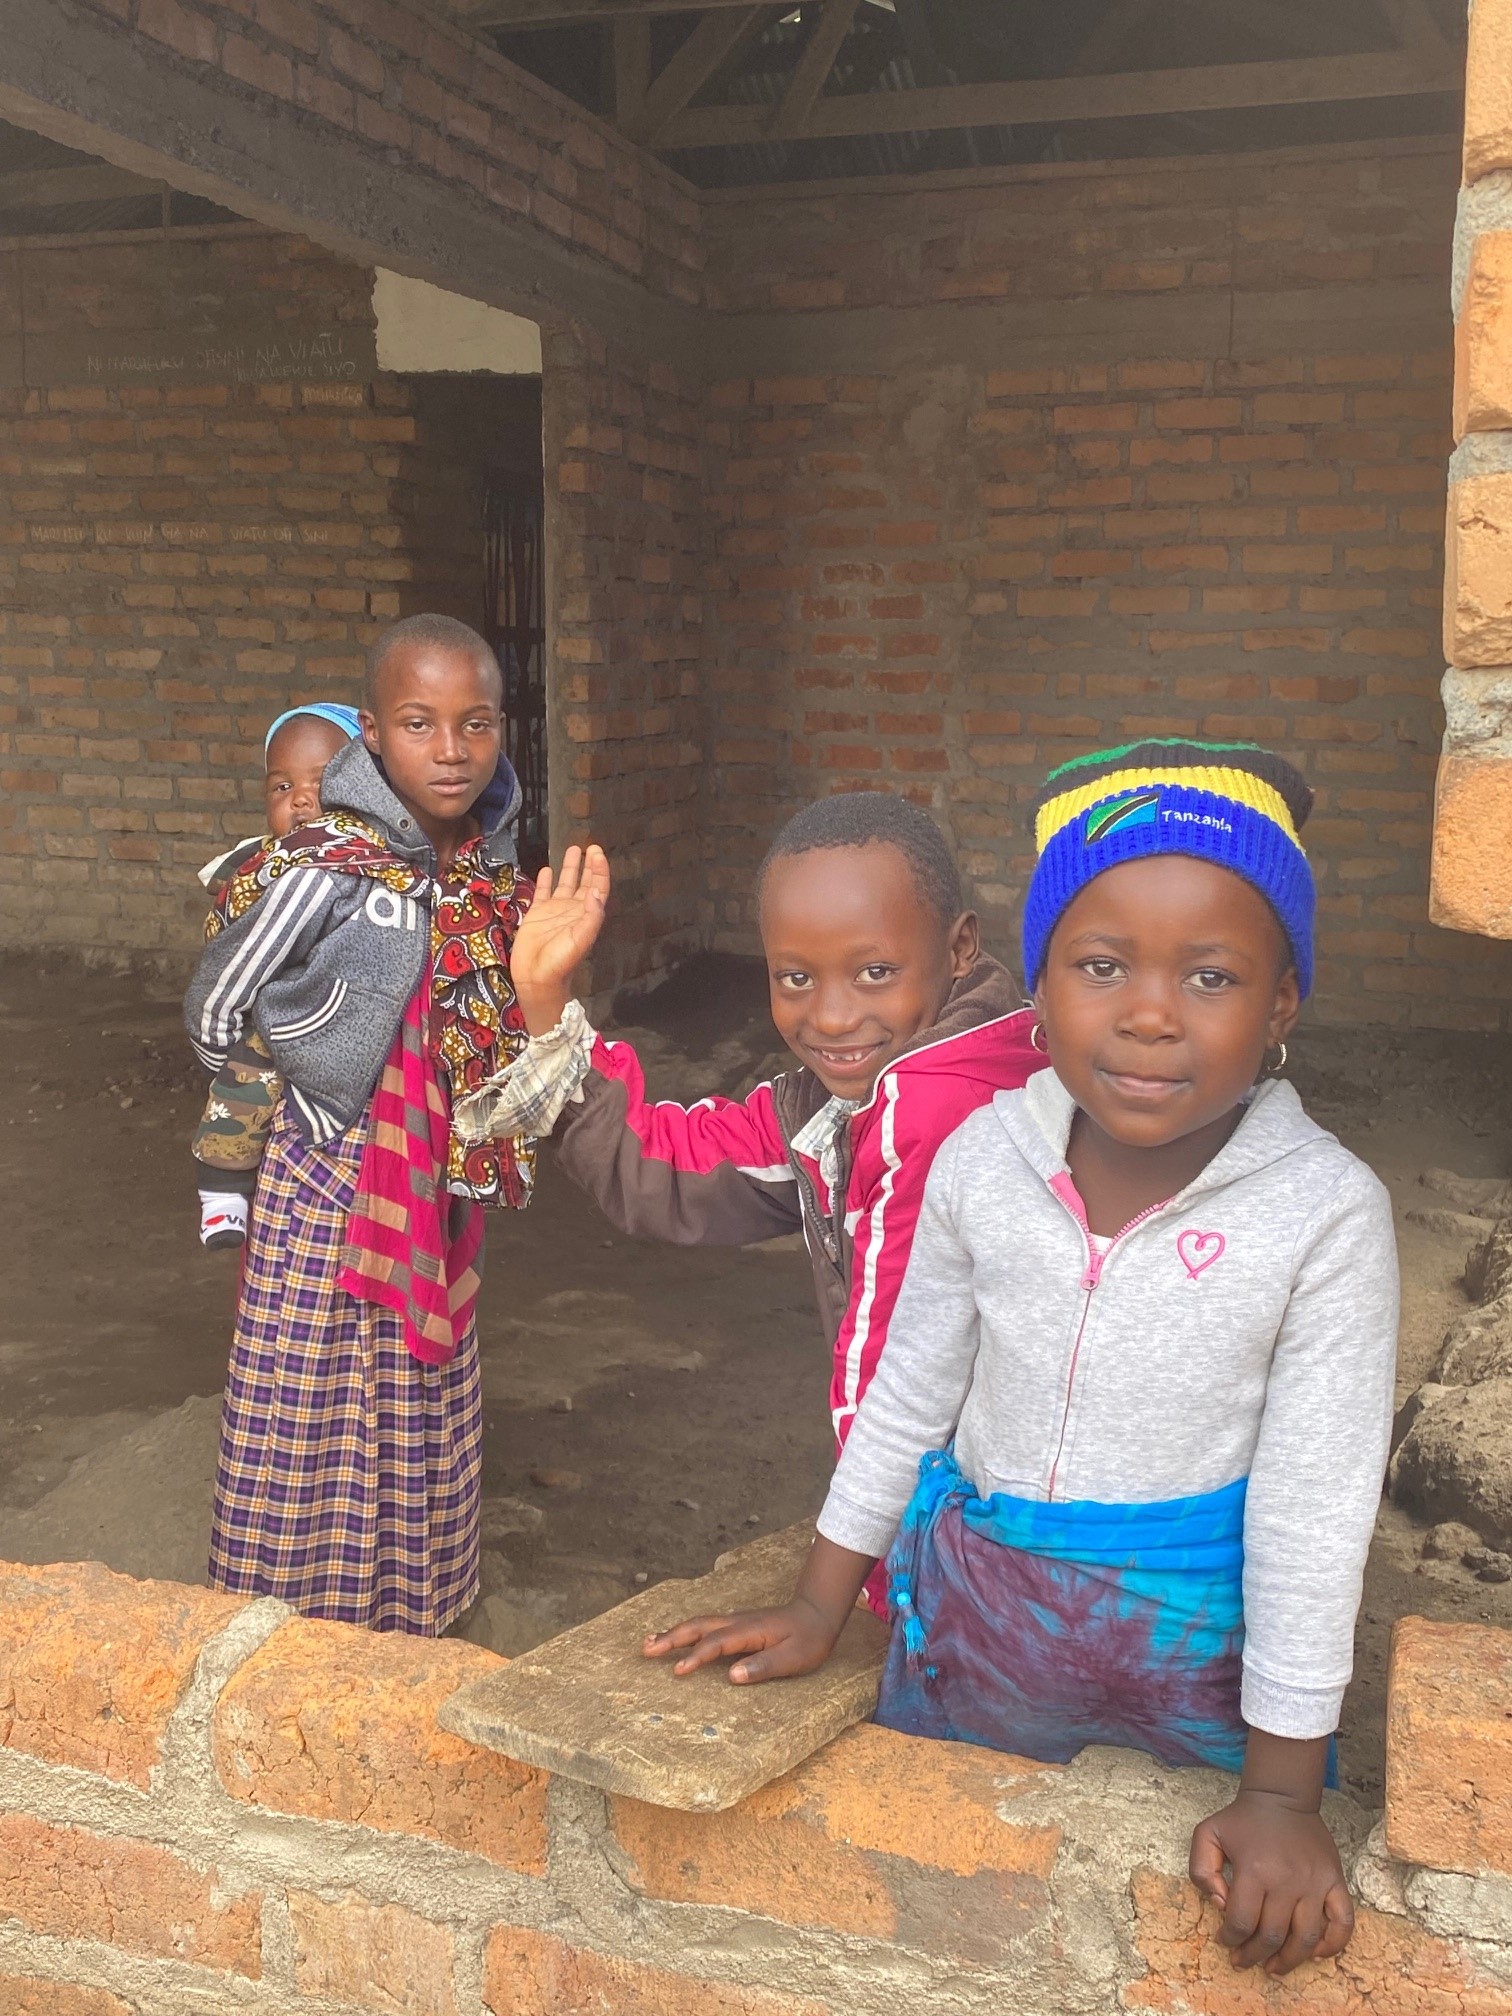 Project: Ondersteuning weeshuis Indonesië en Tanzania